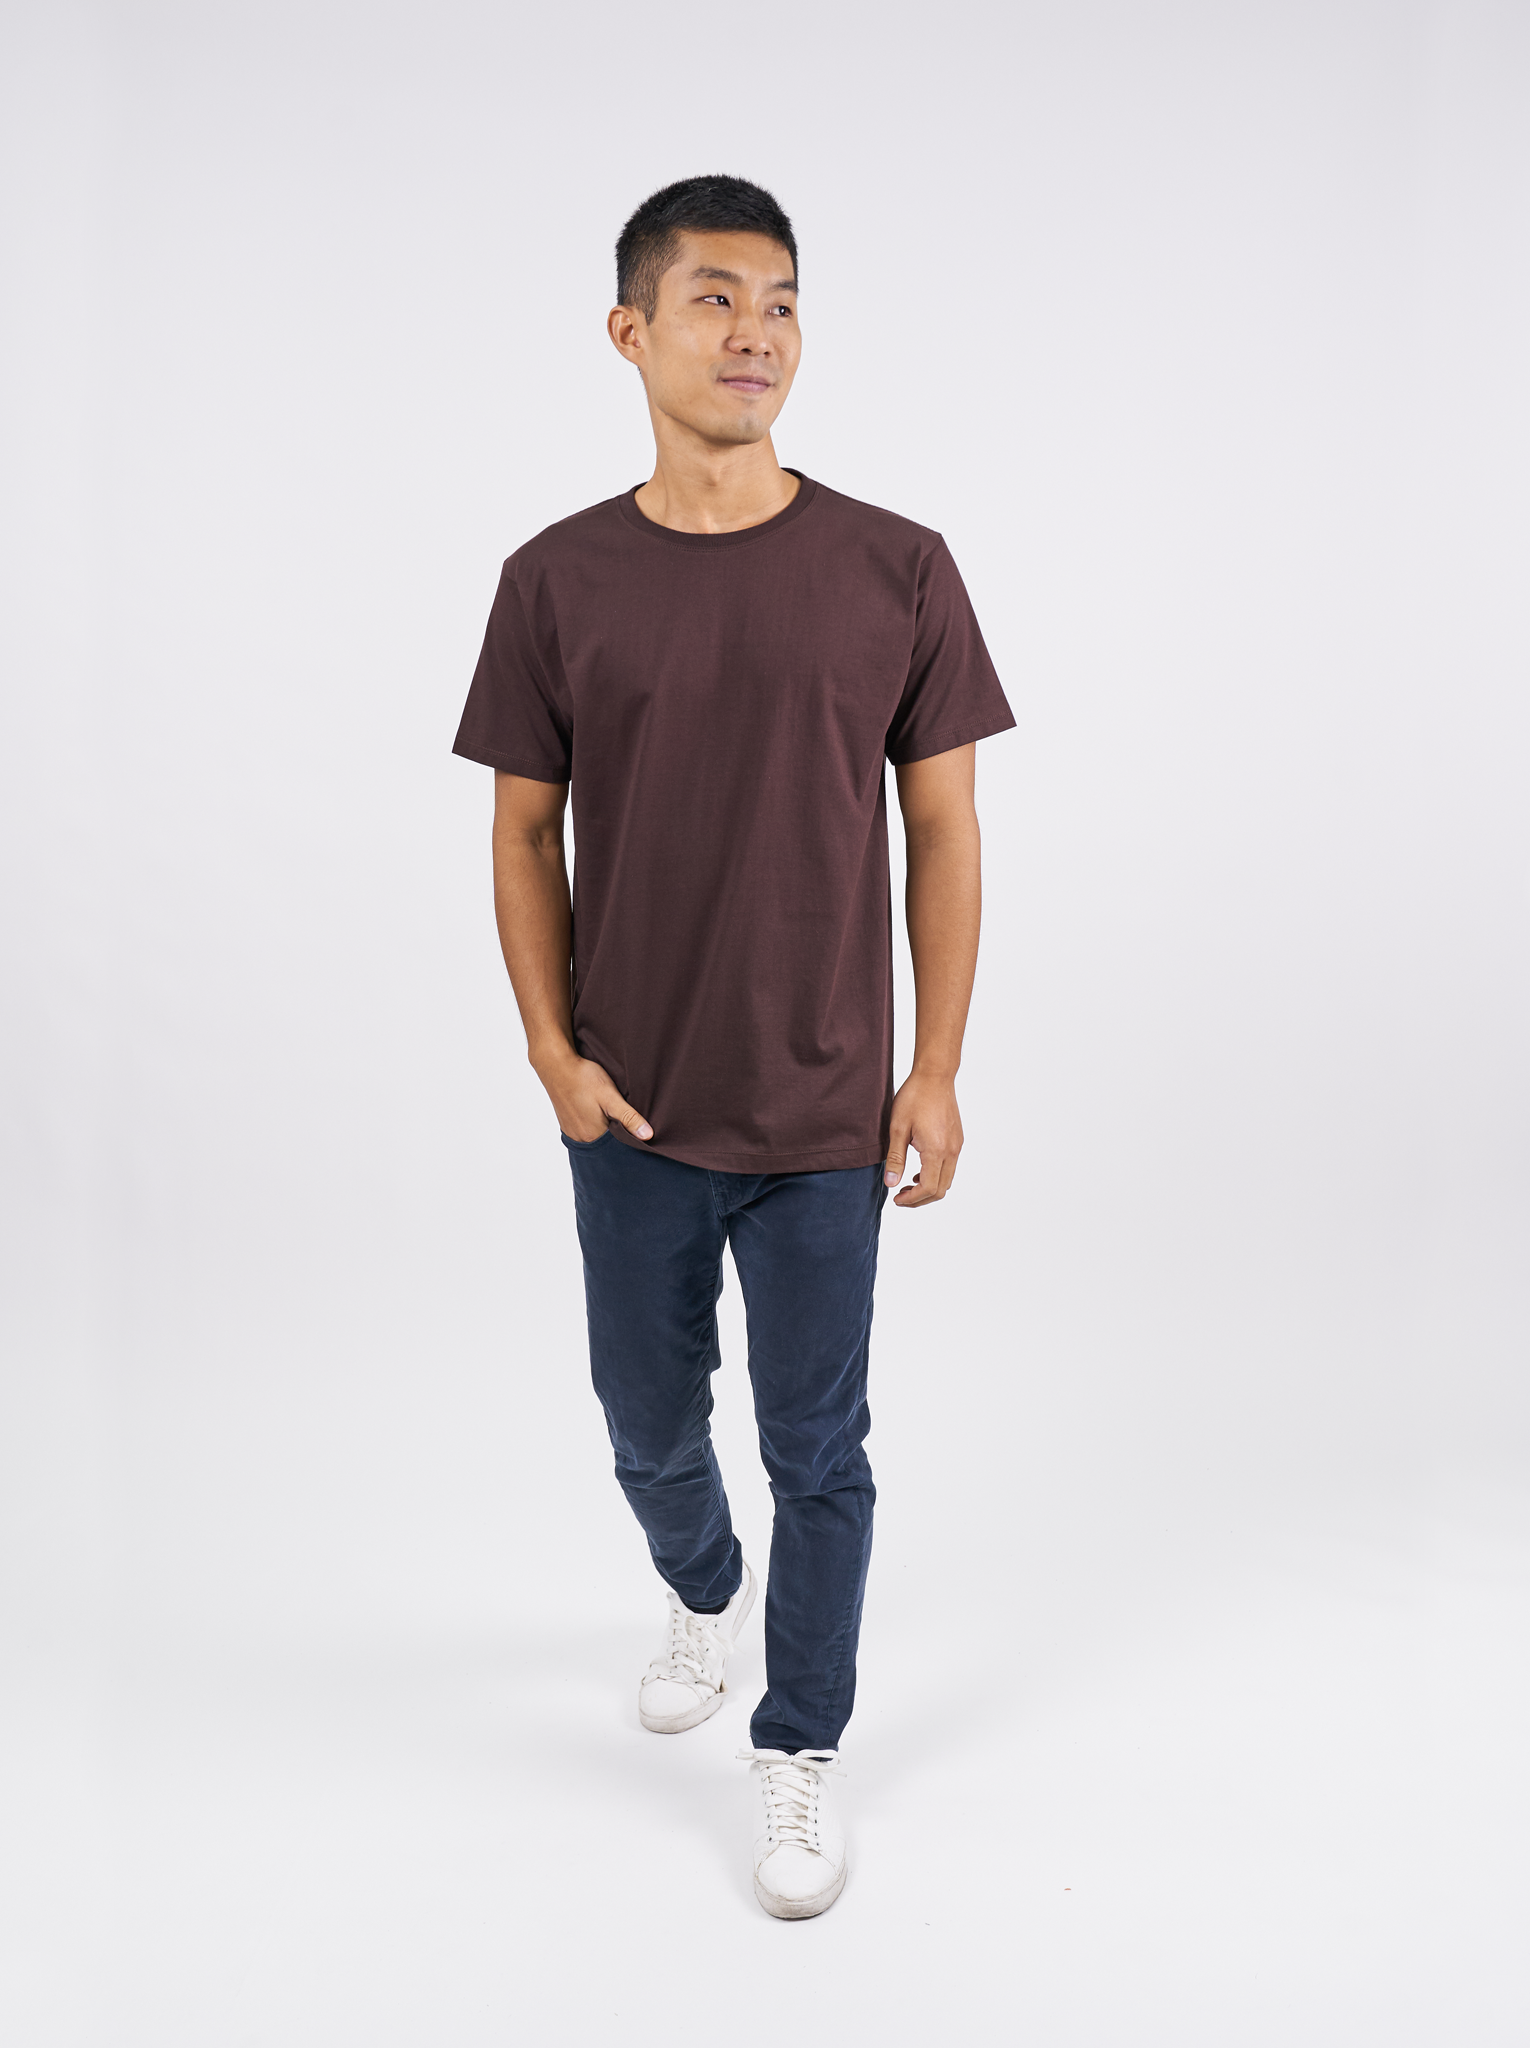 T-Shirt เสื้อยืด (Brown, สีน้ำตาล)(Unisex)